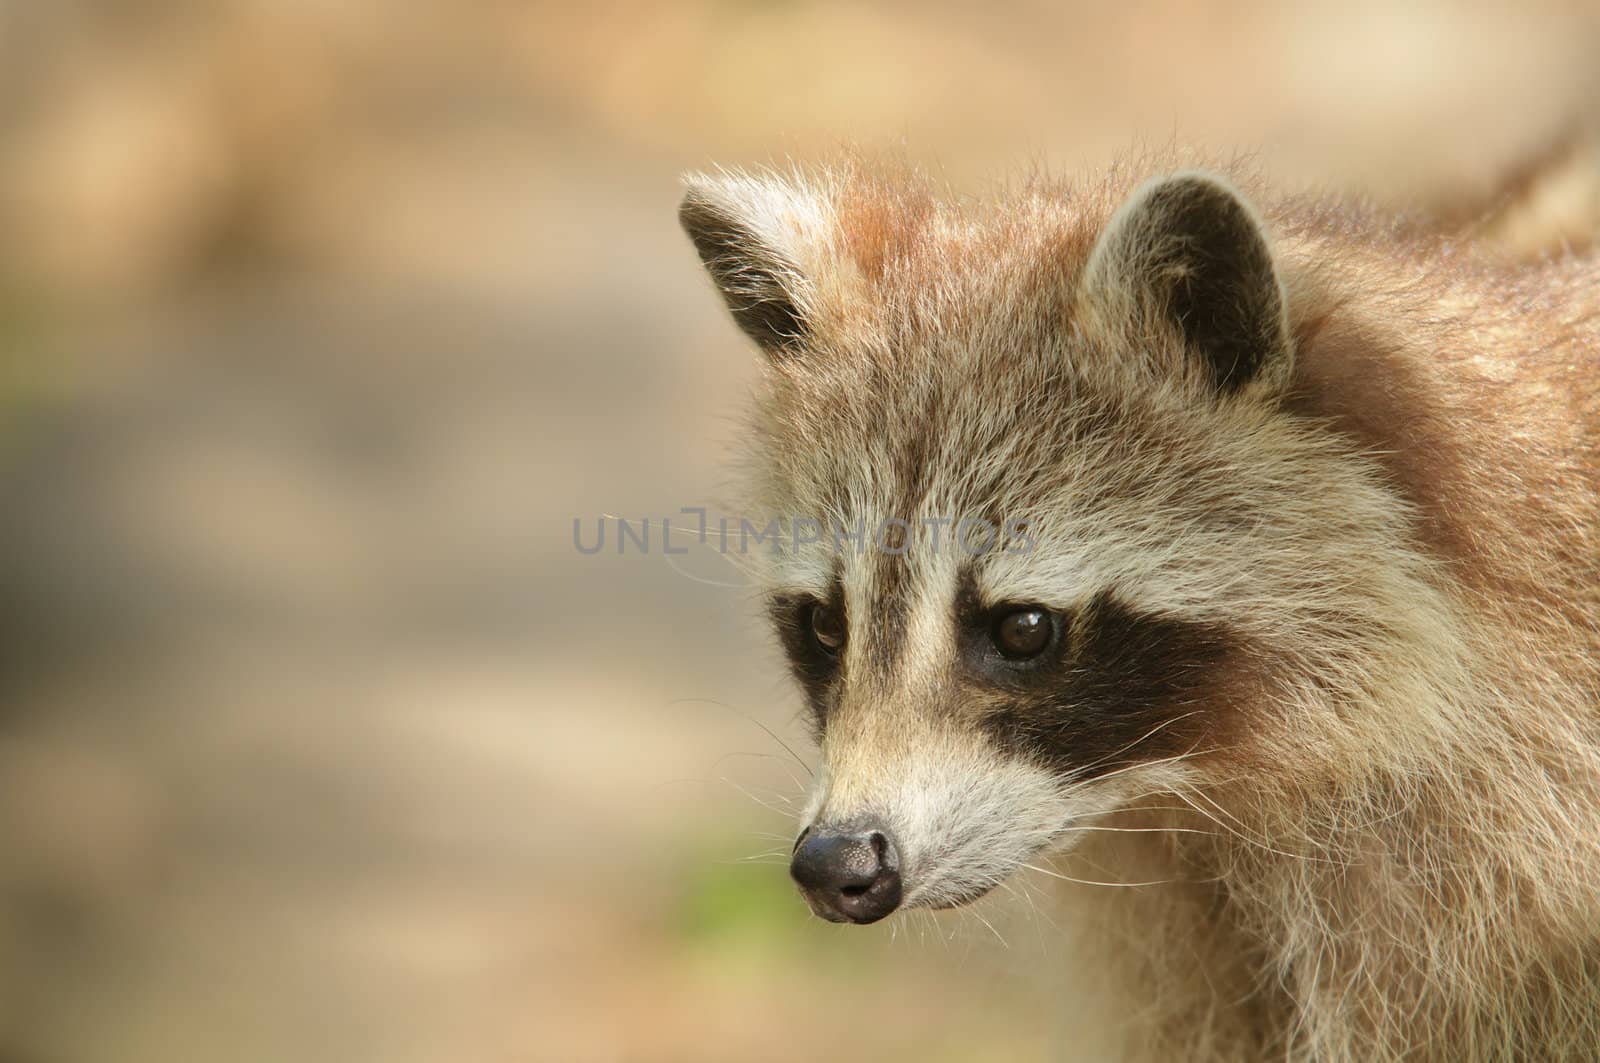 Raccoon portrait by Hbak